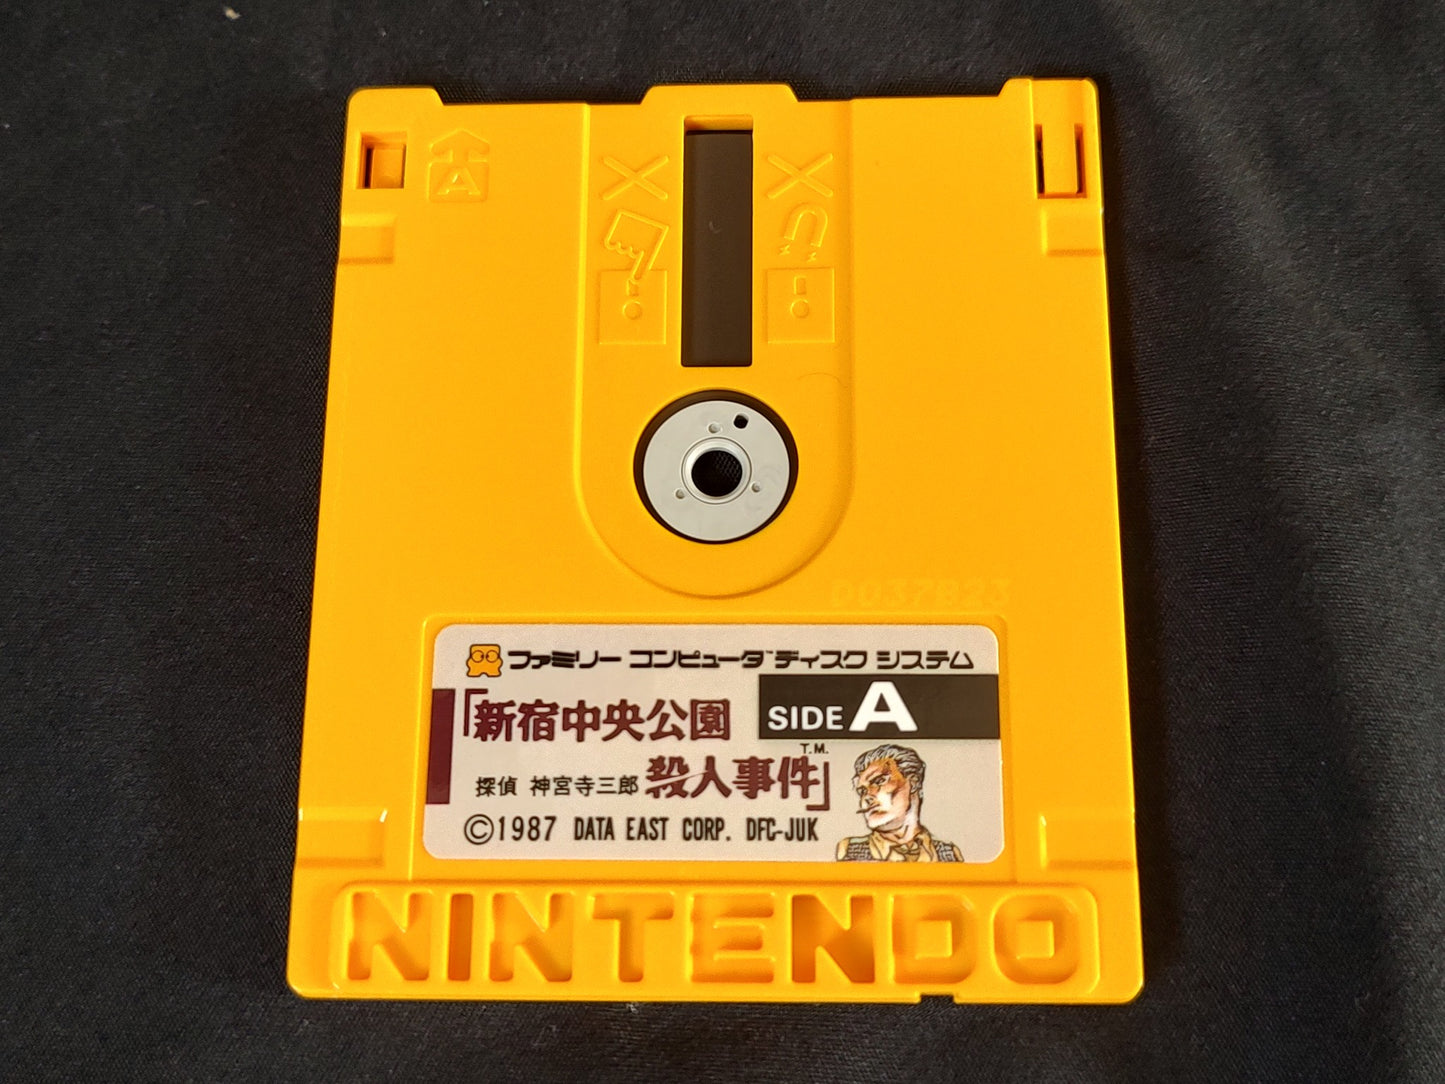 The Legend of Zelda (NES) Disk System, Game disk and box set-f0820-